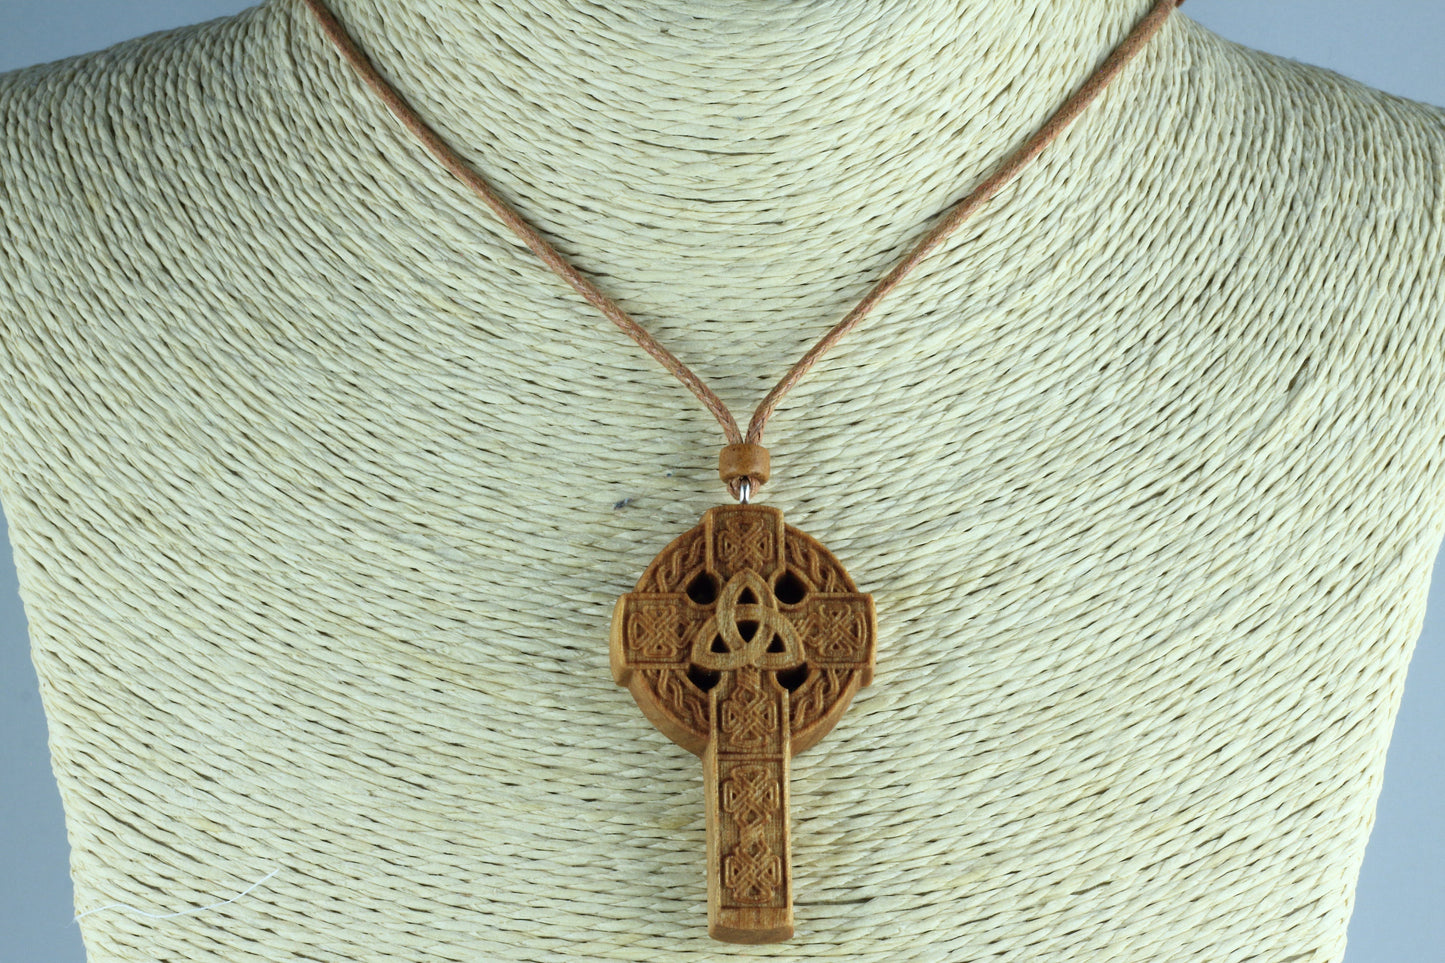 Celtic cross, Irish cross necklace, wooden necklace